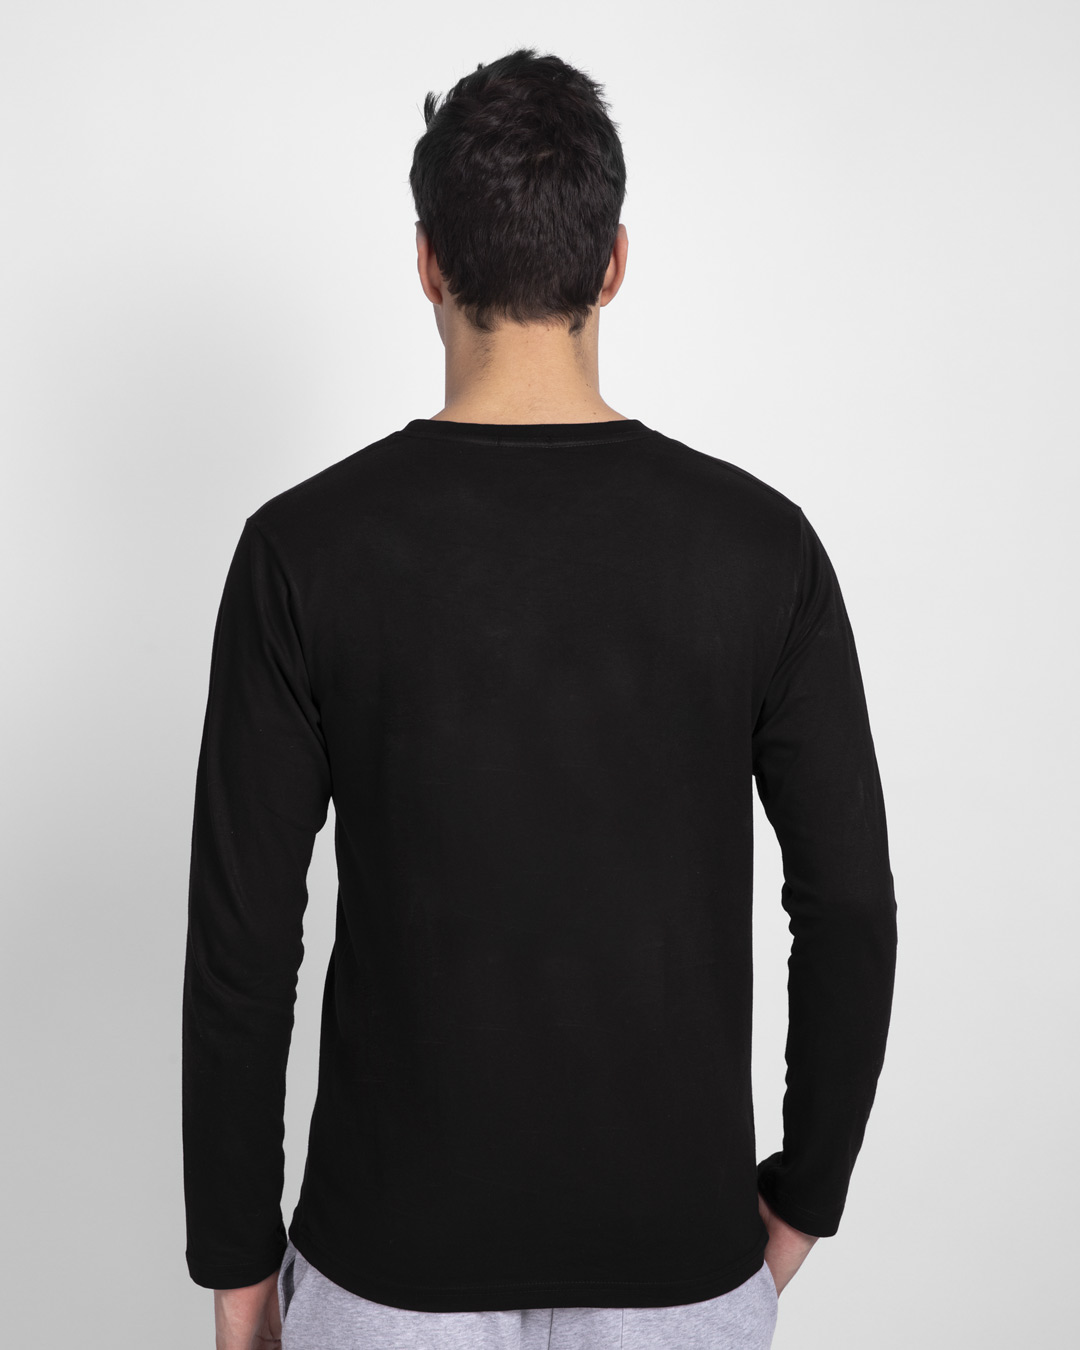 Shop Never Give Up Cricket Full Sleeve T-Shirt Black-Back